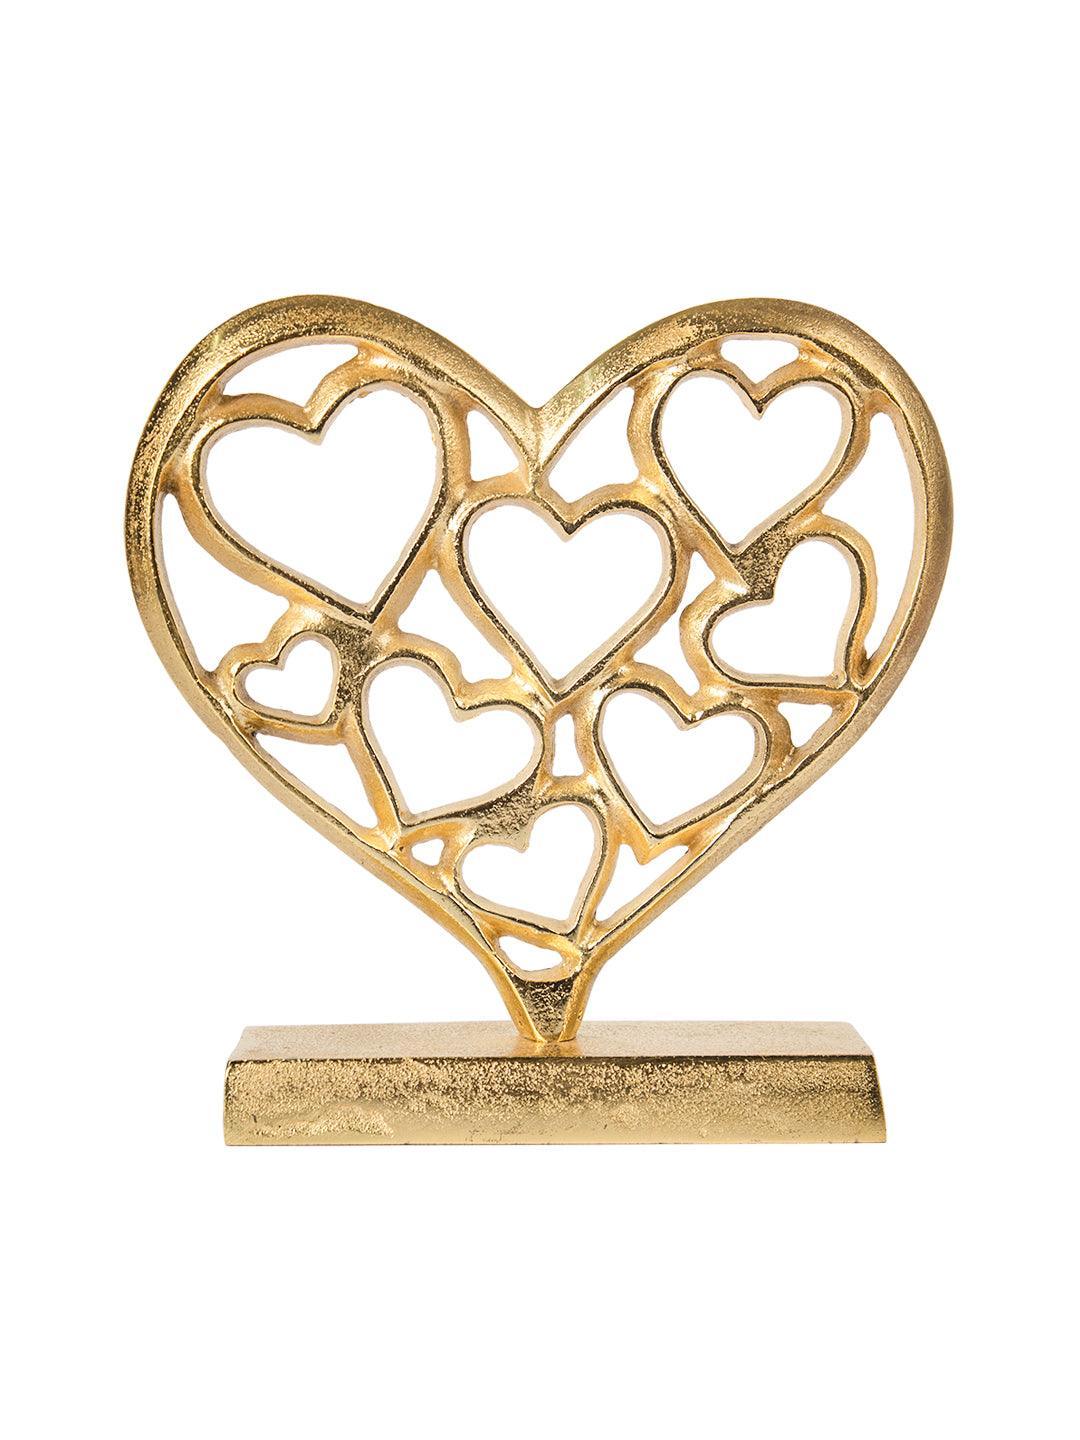 Golden Hearts Sculpture on a Wooden Base - MARKET 99